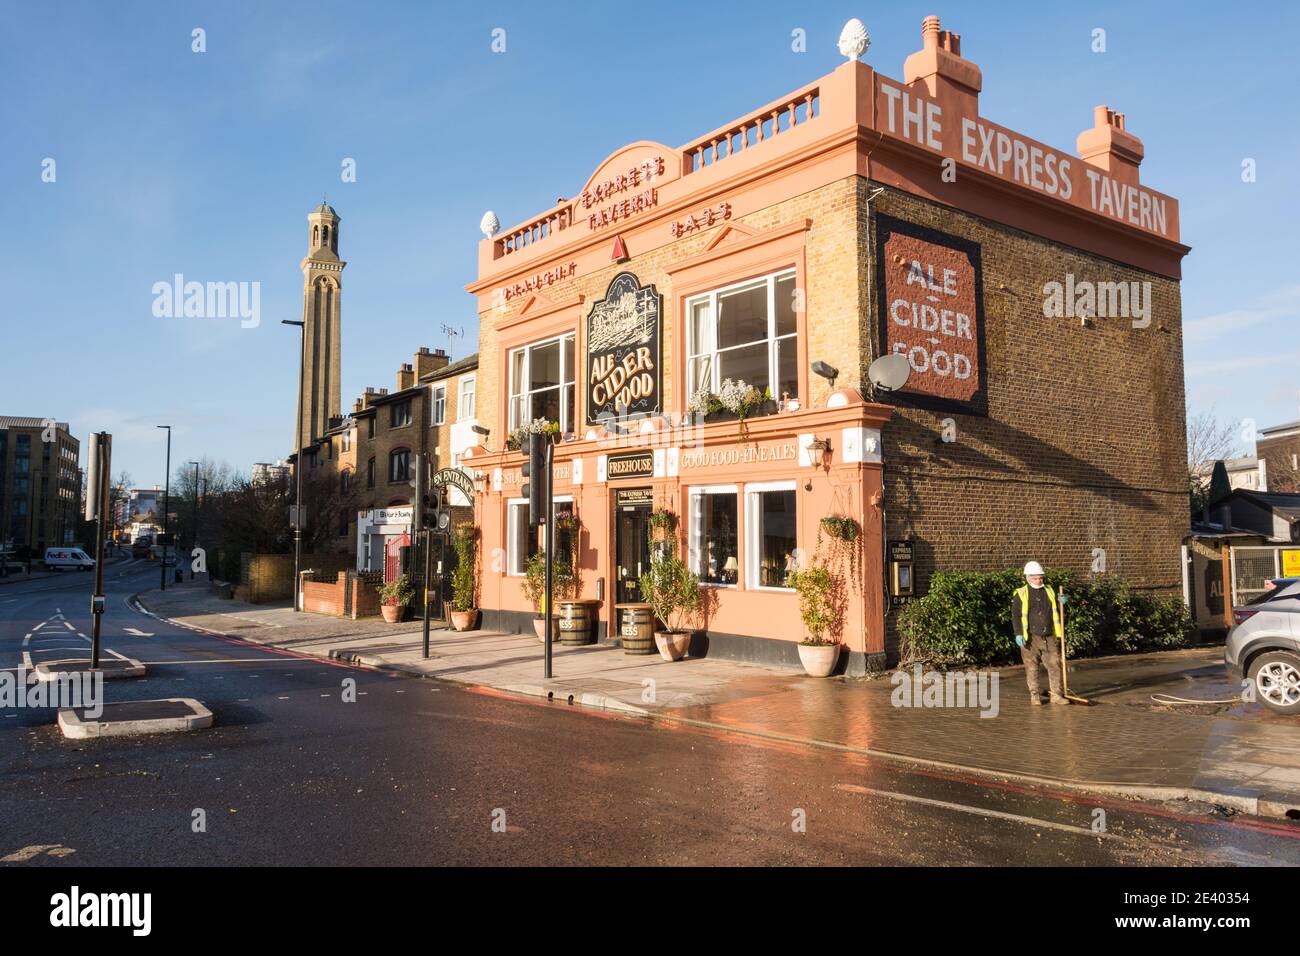 The Express Tavern, Kew Bridge Road, Brentford, TW8, Royaume-Uni Banque D'Images